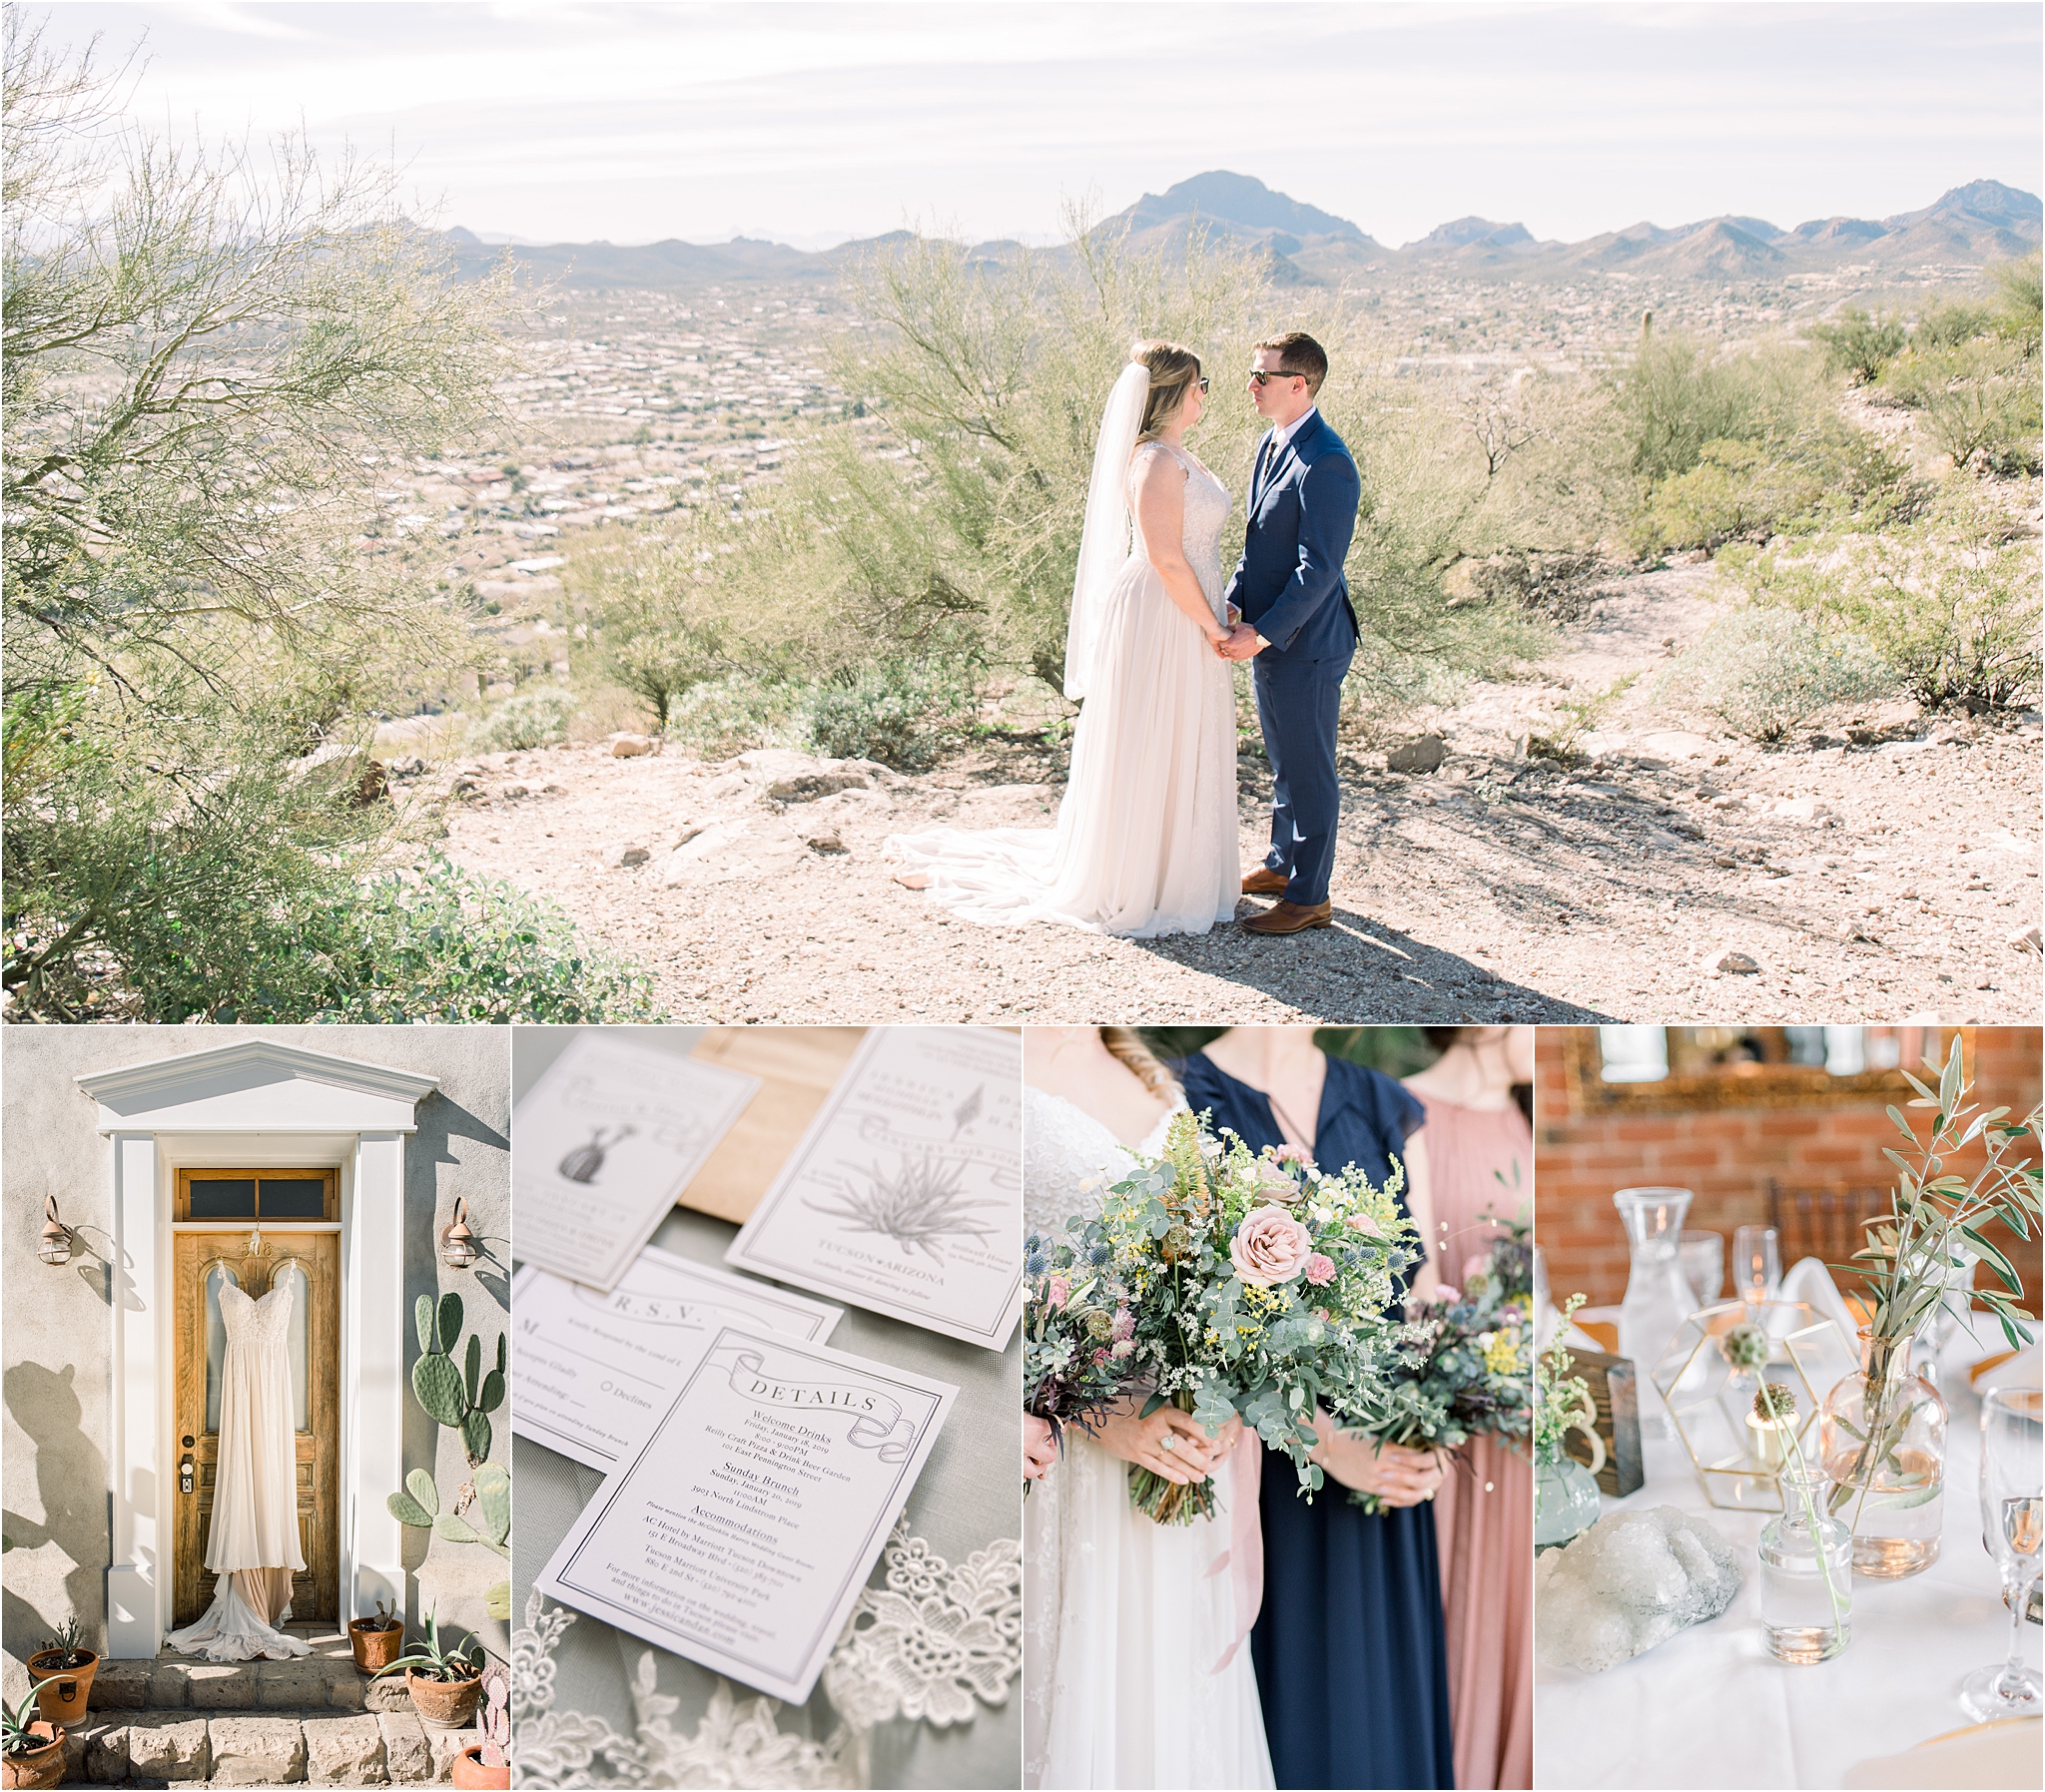 Stillwell House Wedding Tucson AZ Jessica and Dan bridal details | Tucson Wedding Photographer | West End Photography